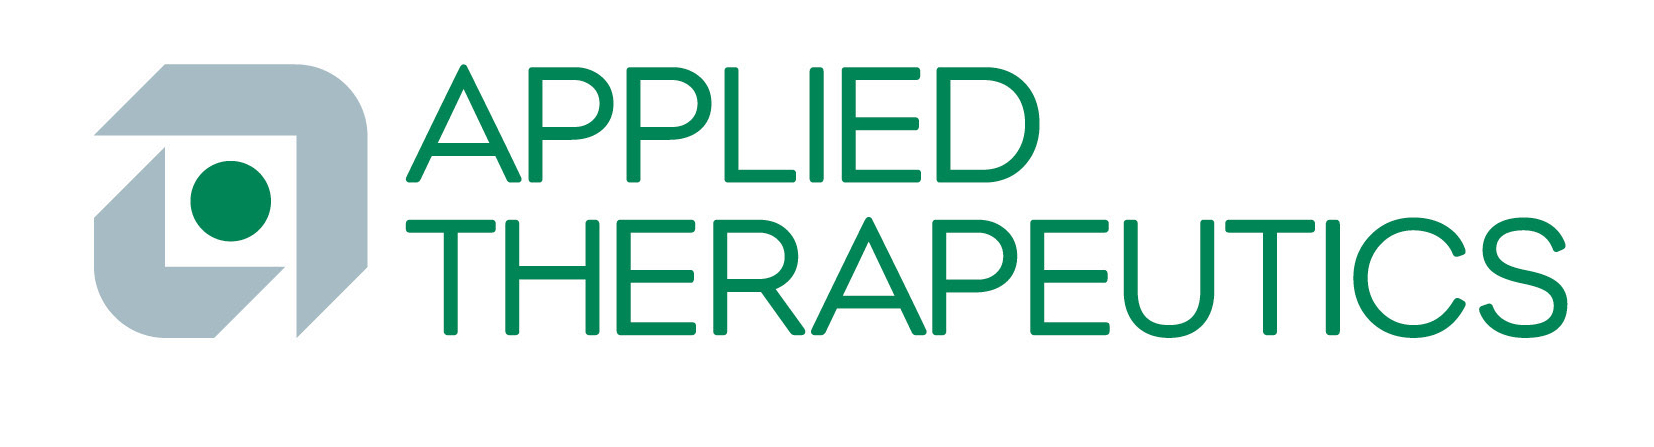 Applied Therapeutics logo.jpg